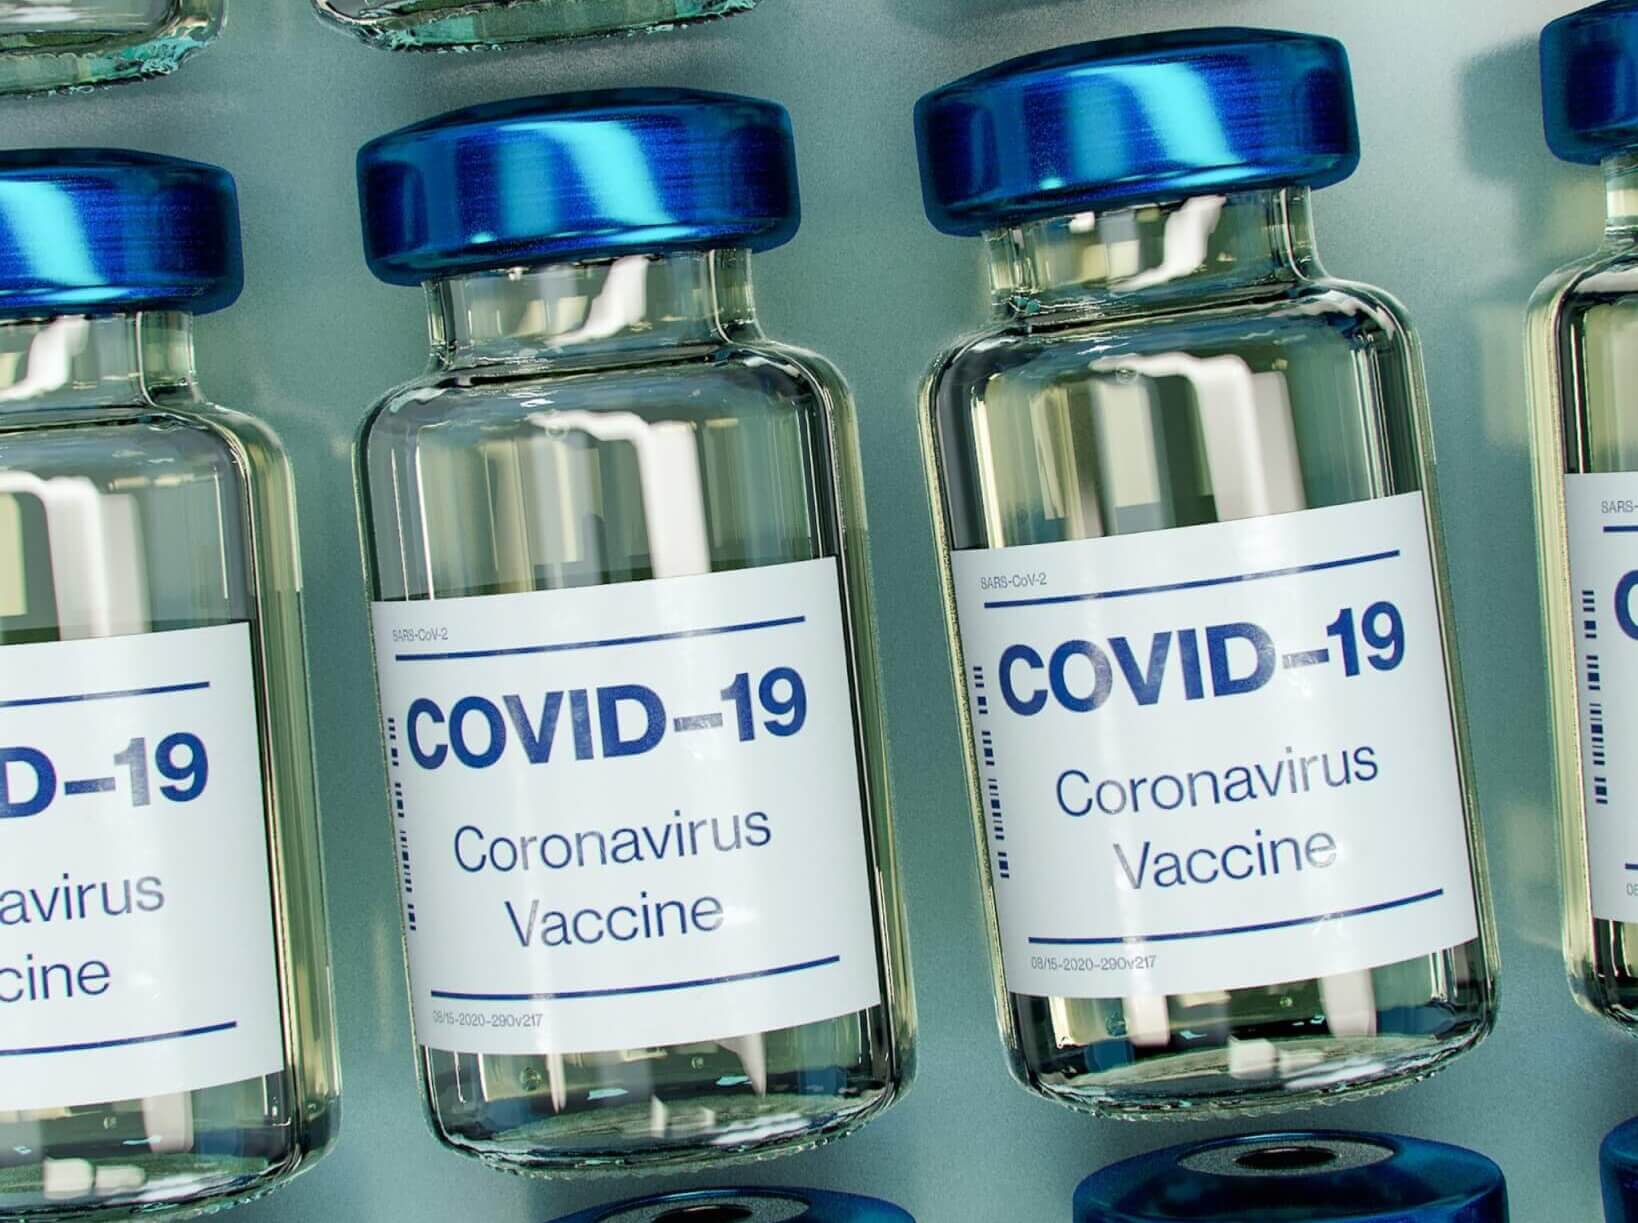 COVID-19 vaccination vials